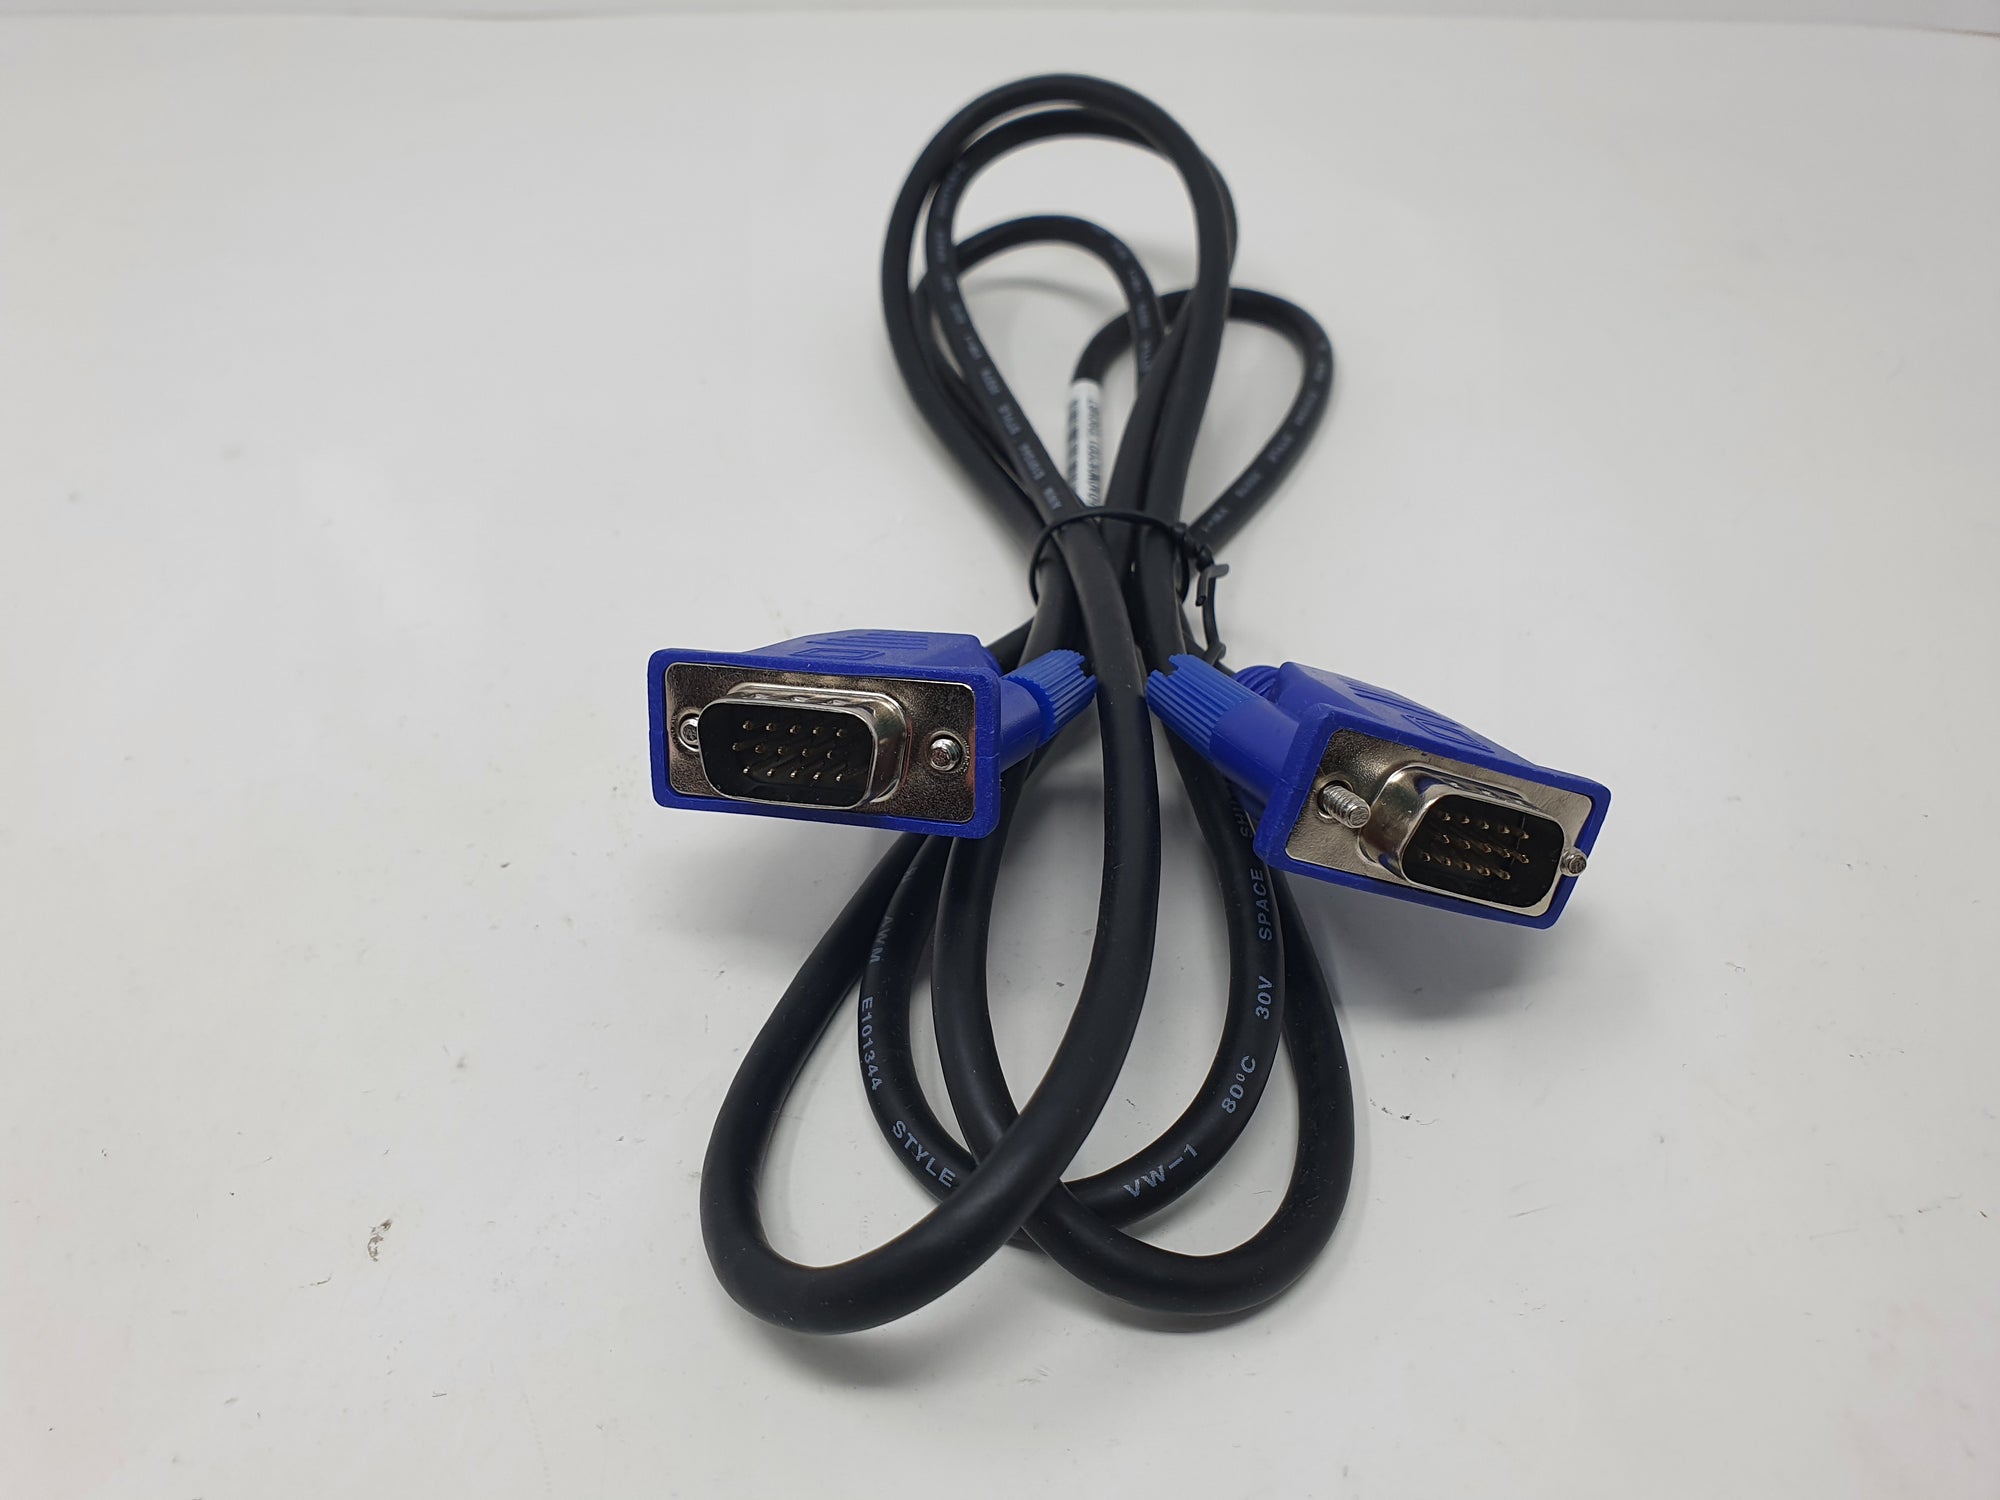 Gumtek VGA Male to VGA Male Cable PC Monitor Lead 1.8m